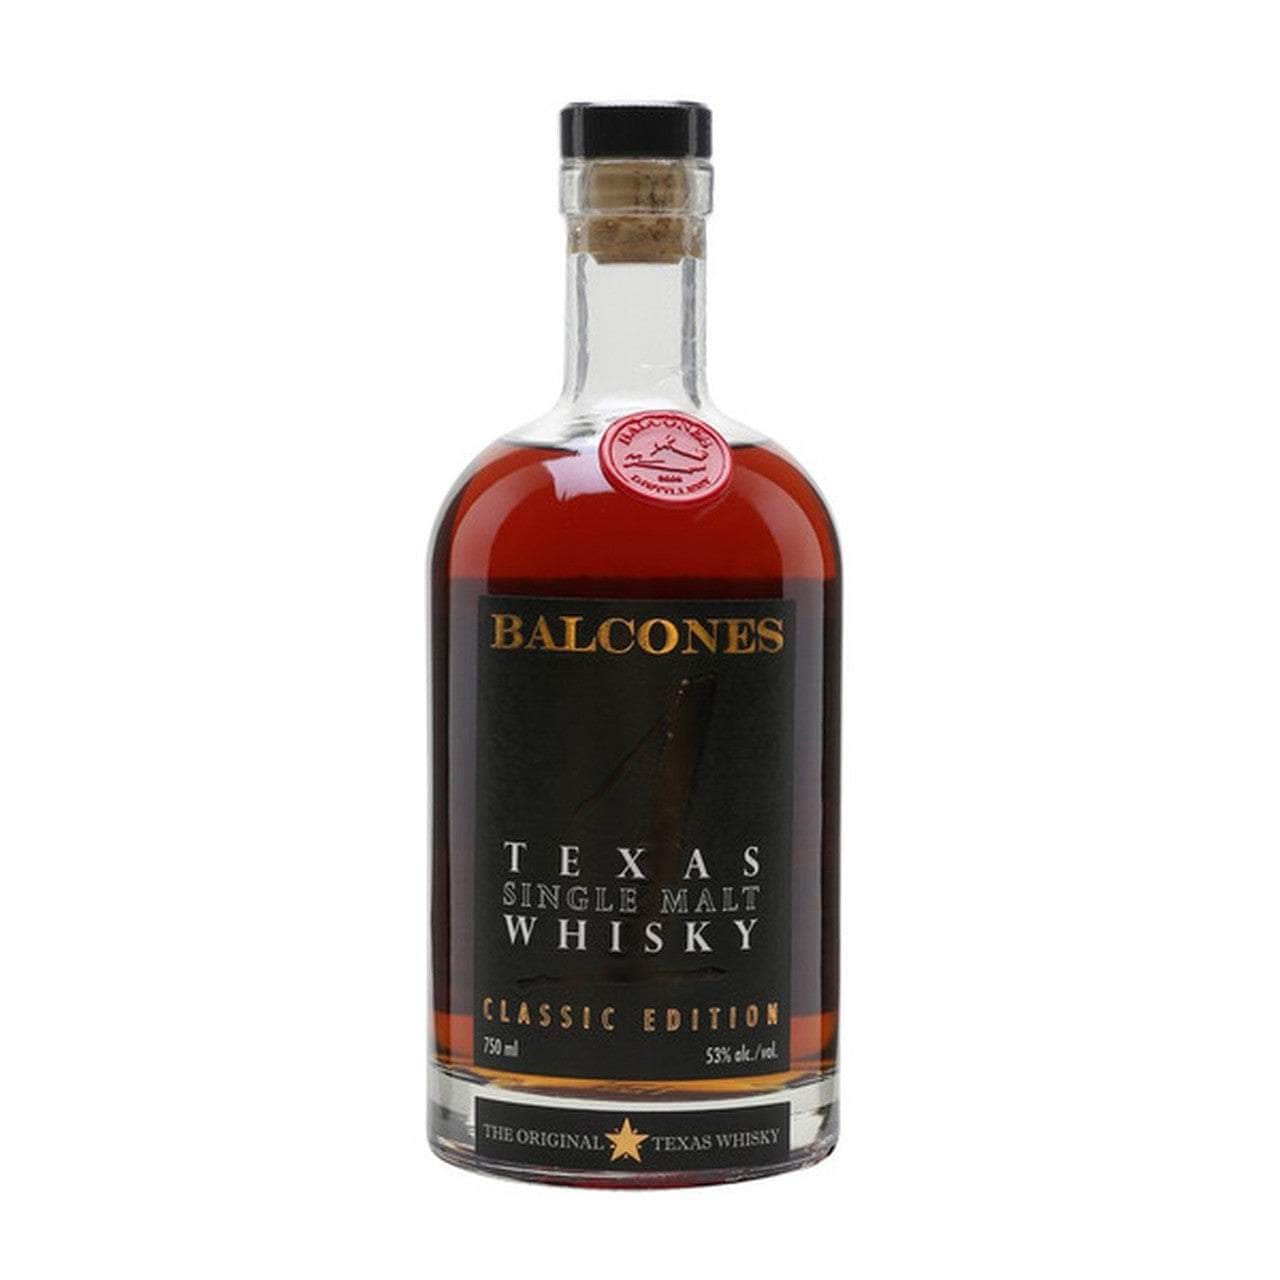 Balcones Texas Bourbon Gift Set